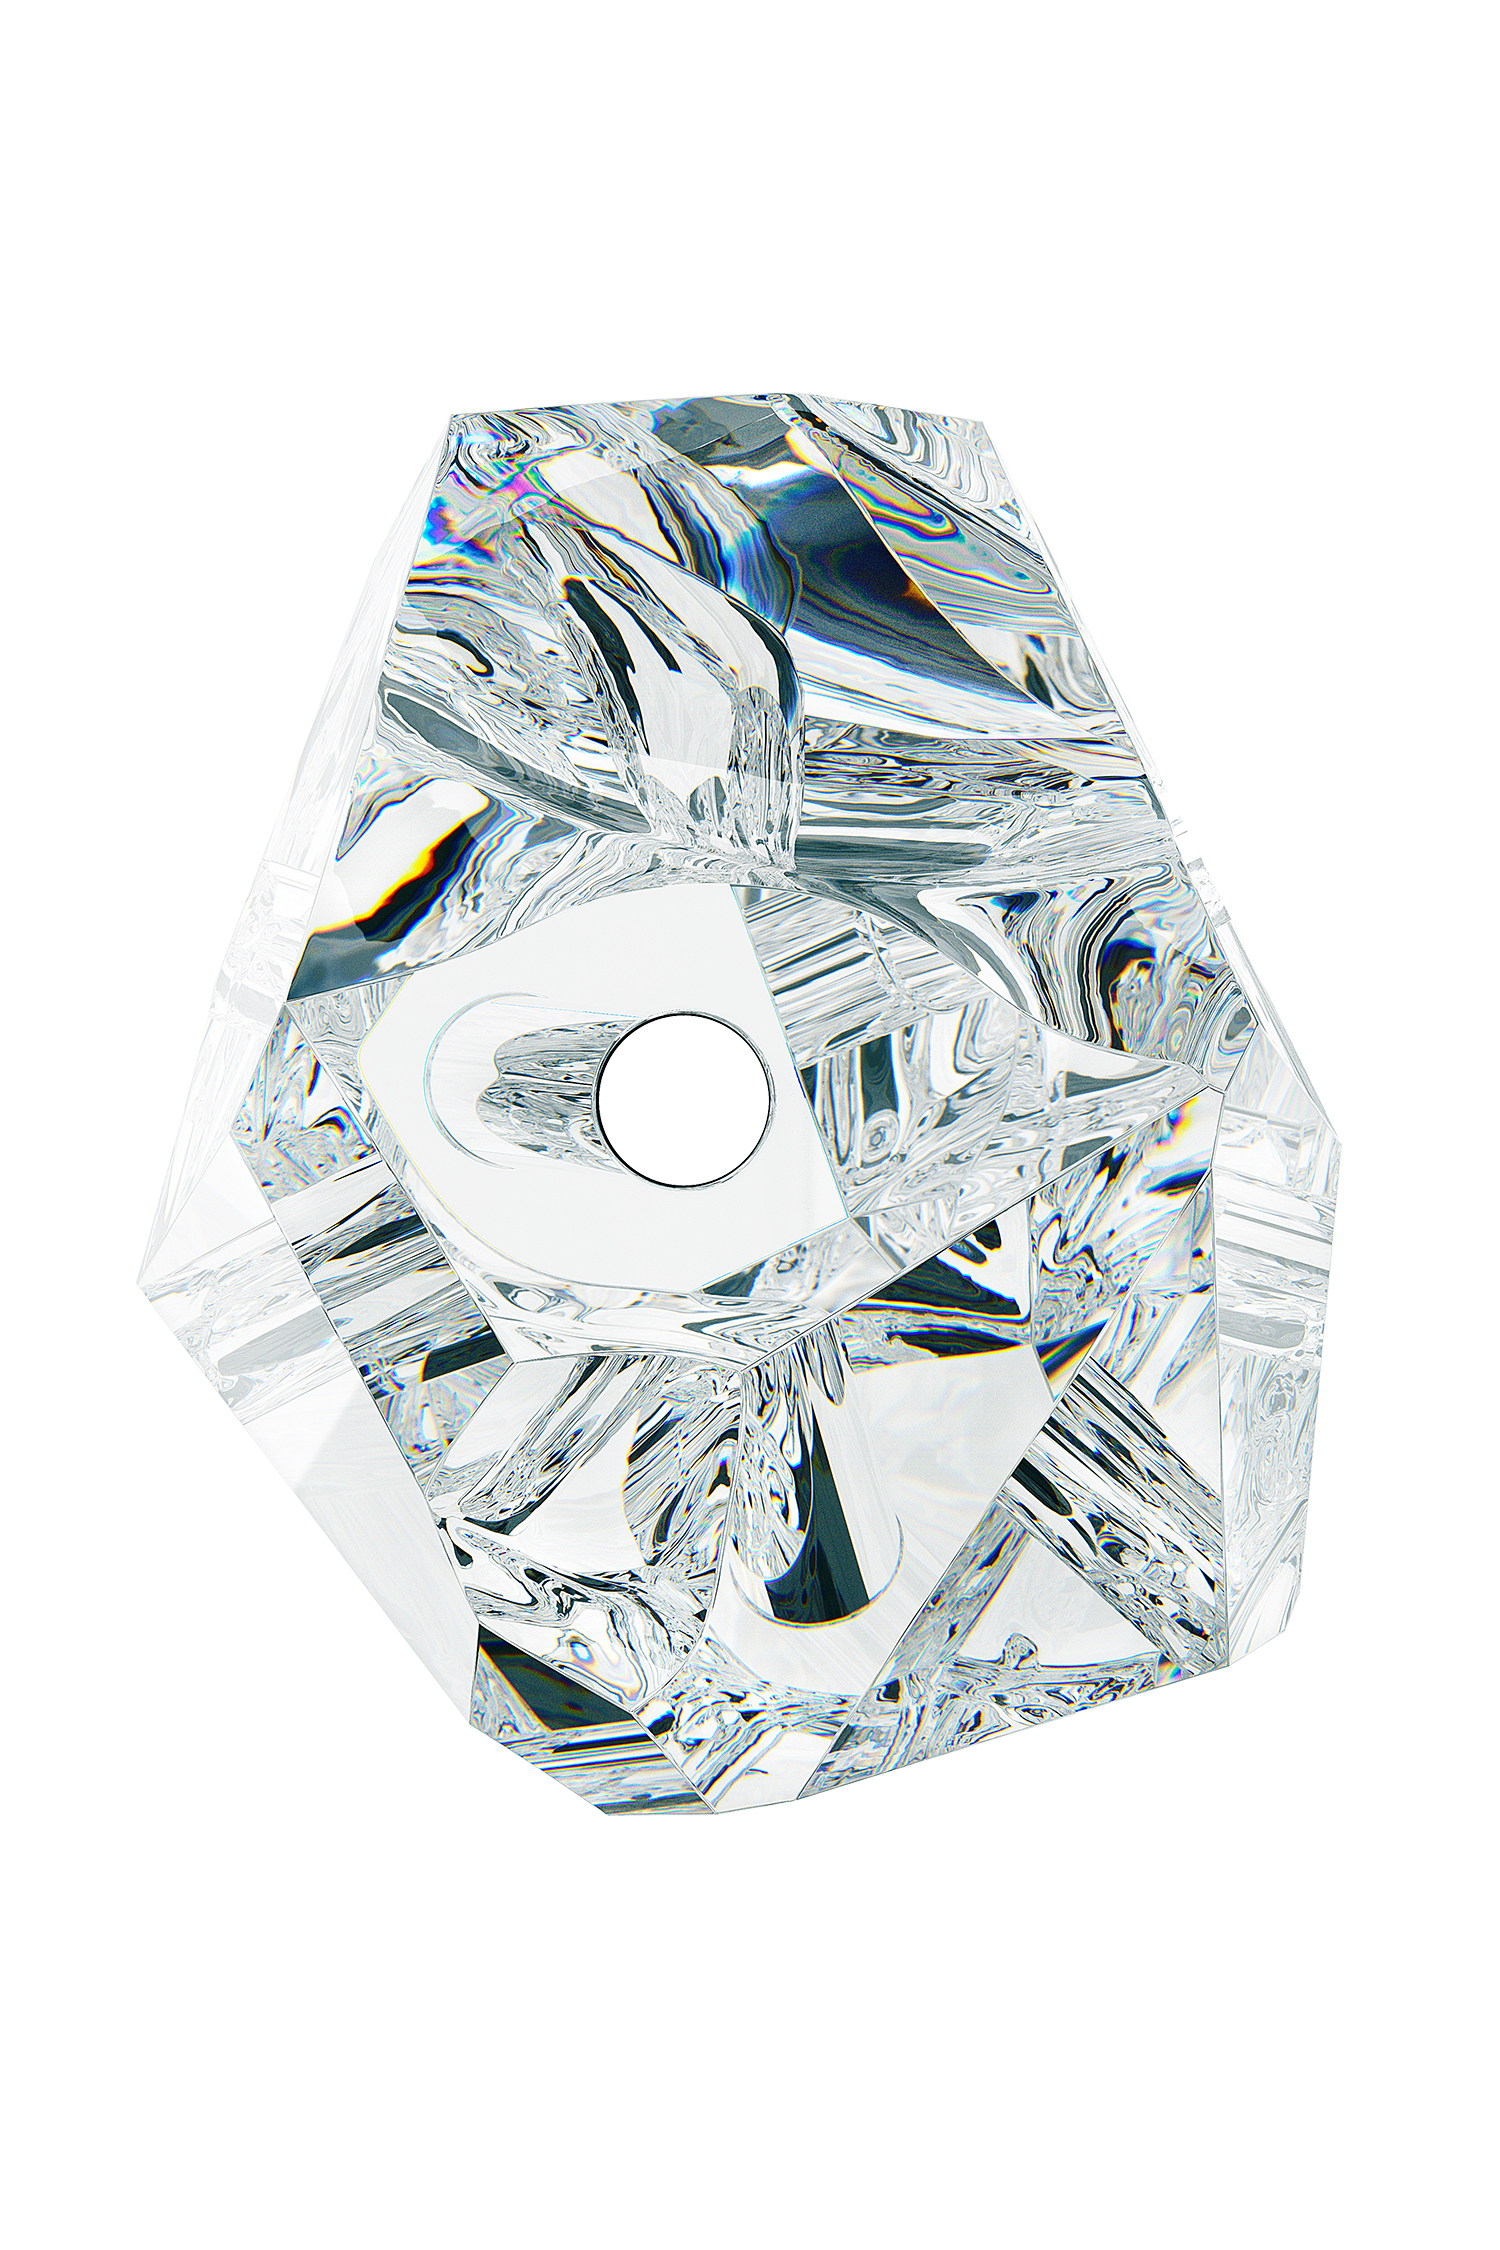 Glaciarium Crystal Shard C